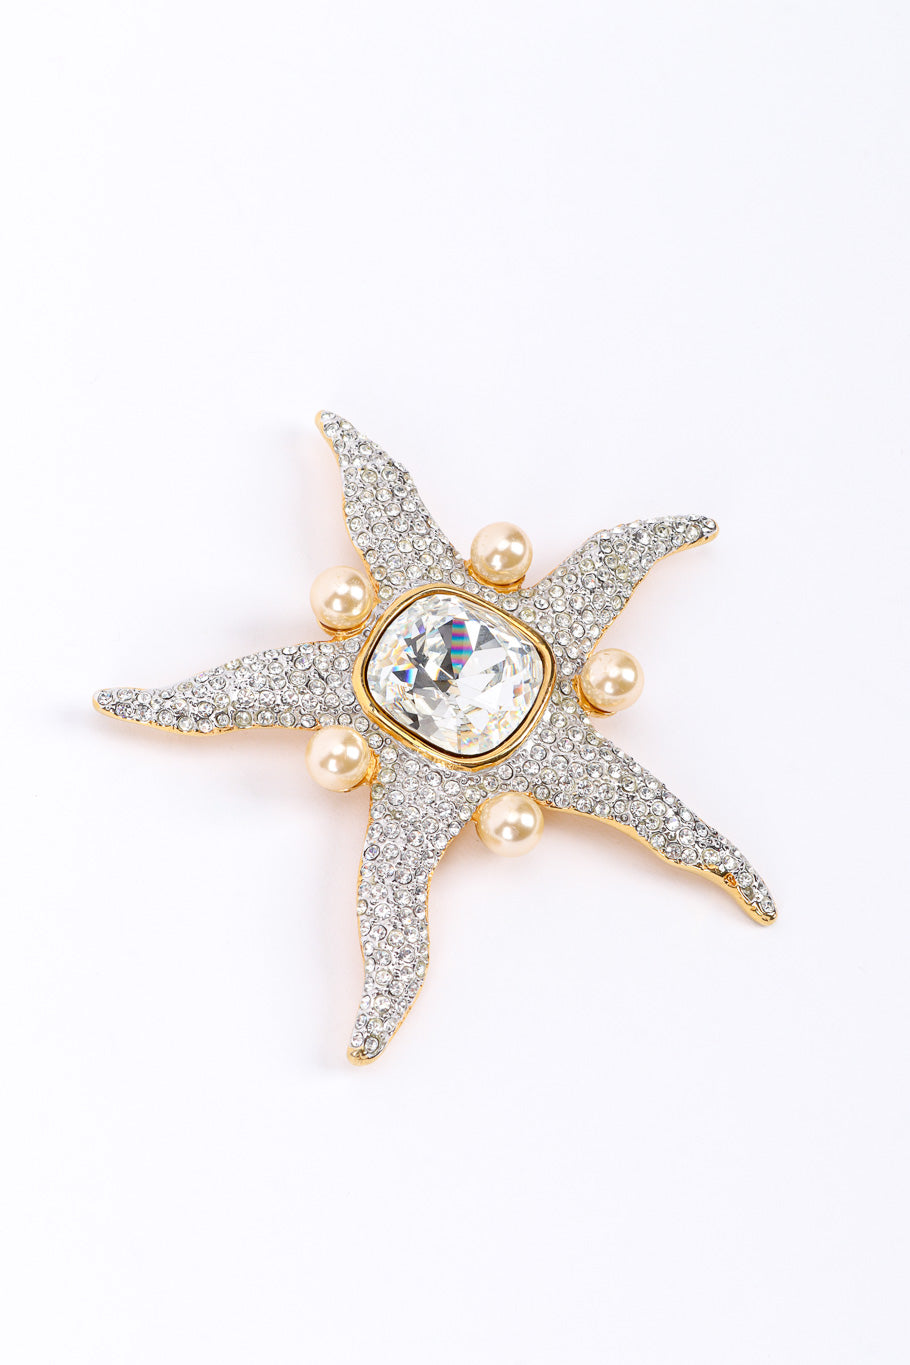 Starfish Rhinestone Brooch by Valentino @recessla